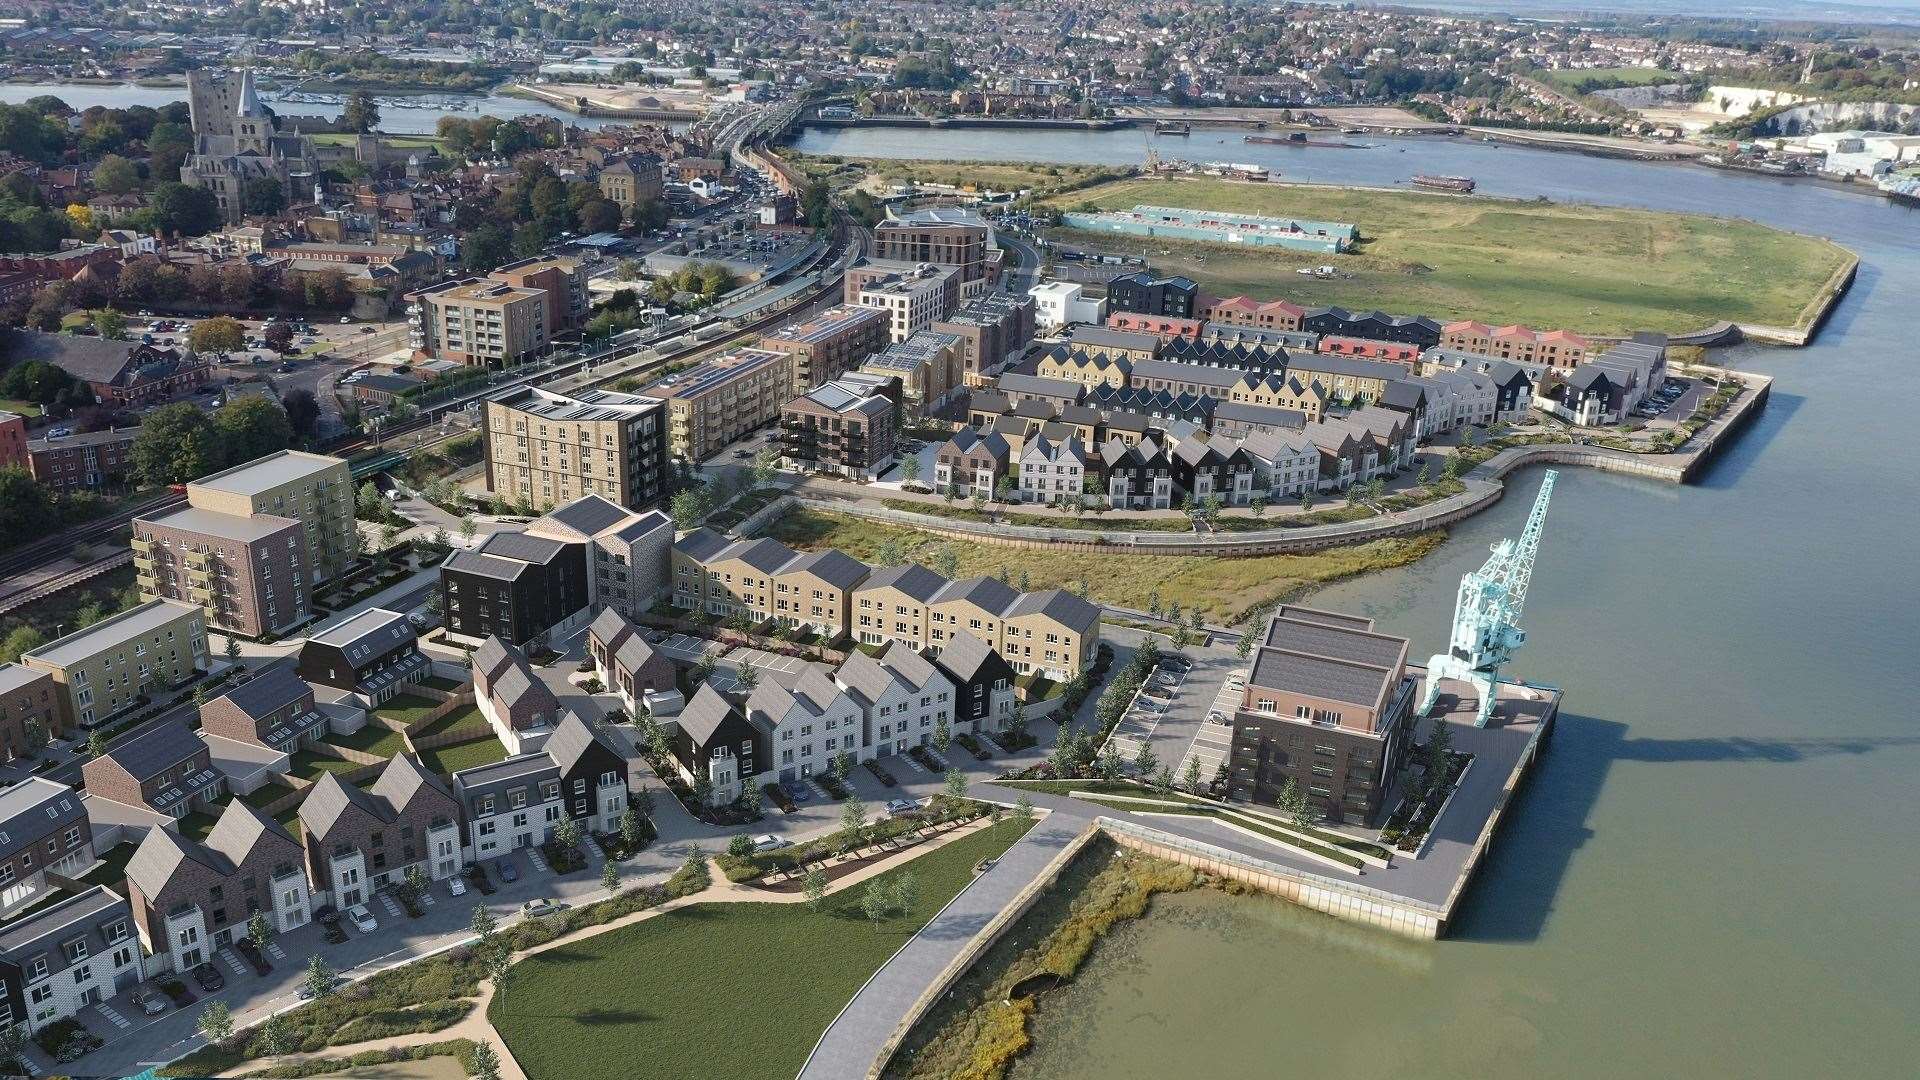 Rochester Riverside is a 1,400-home development alongside the River Medway